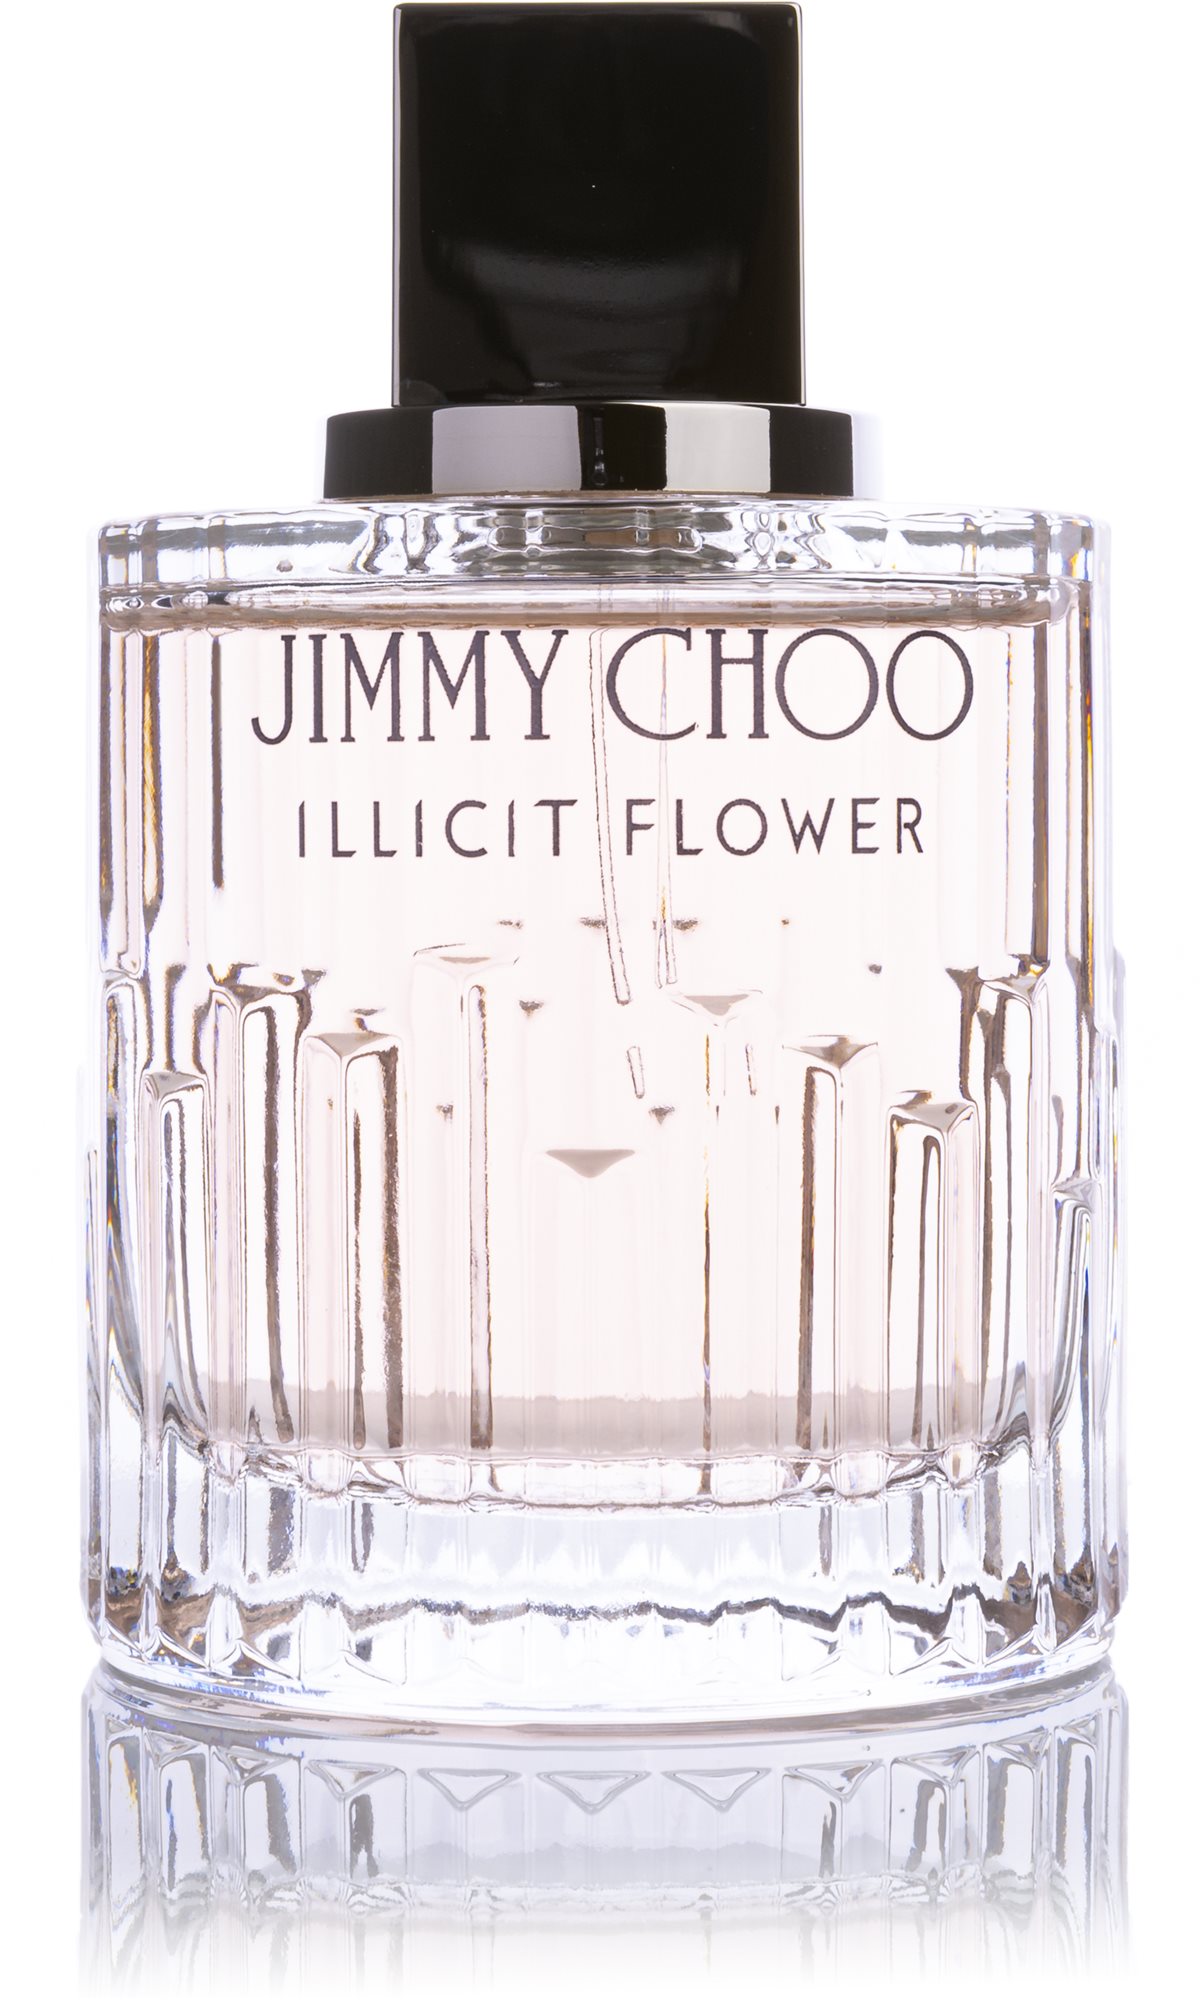 JIMMY CHOO Illcit Flower EdT